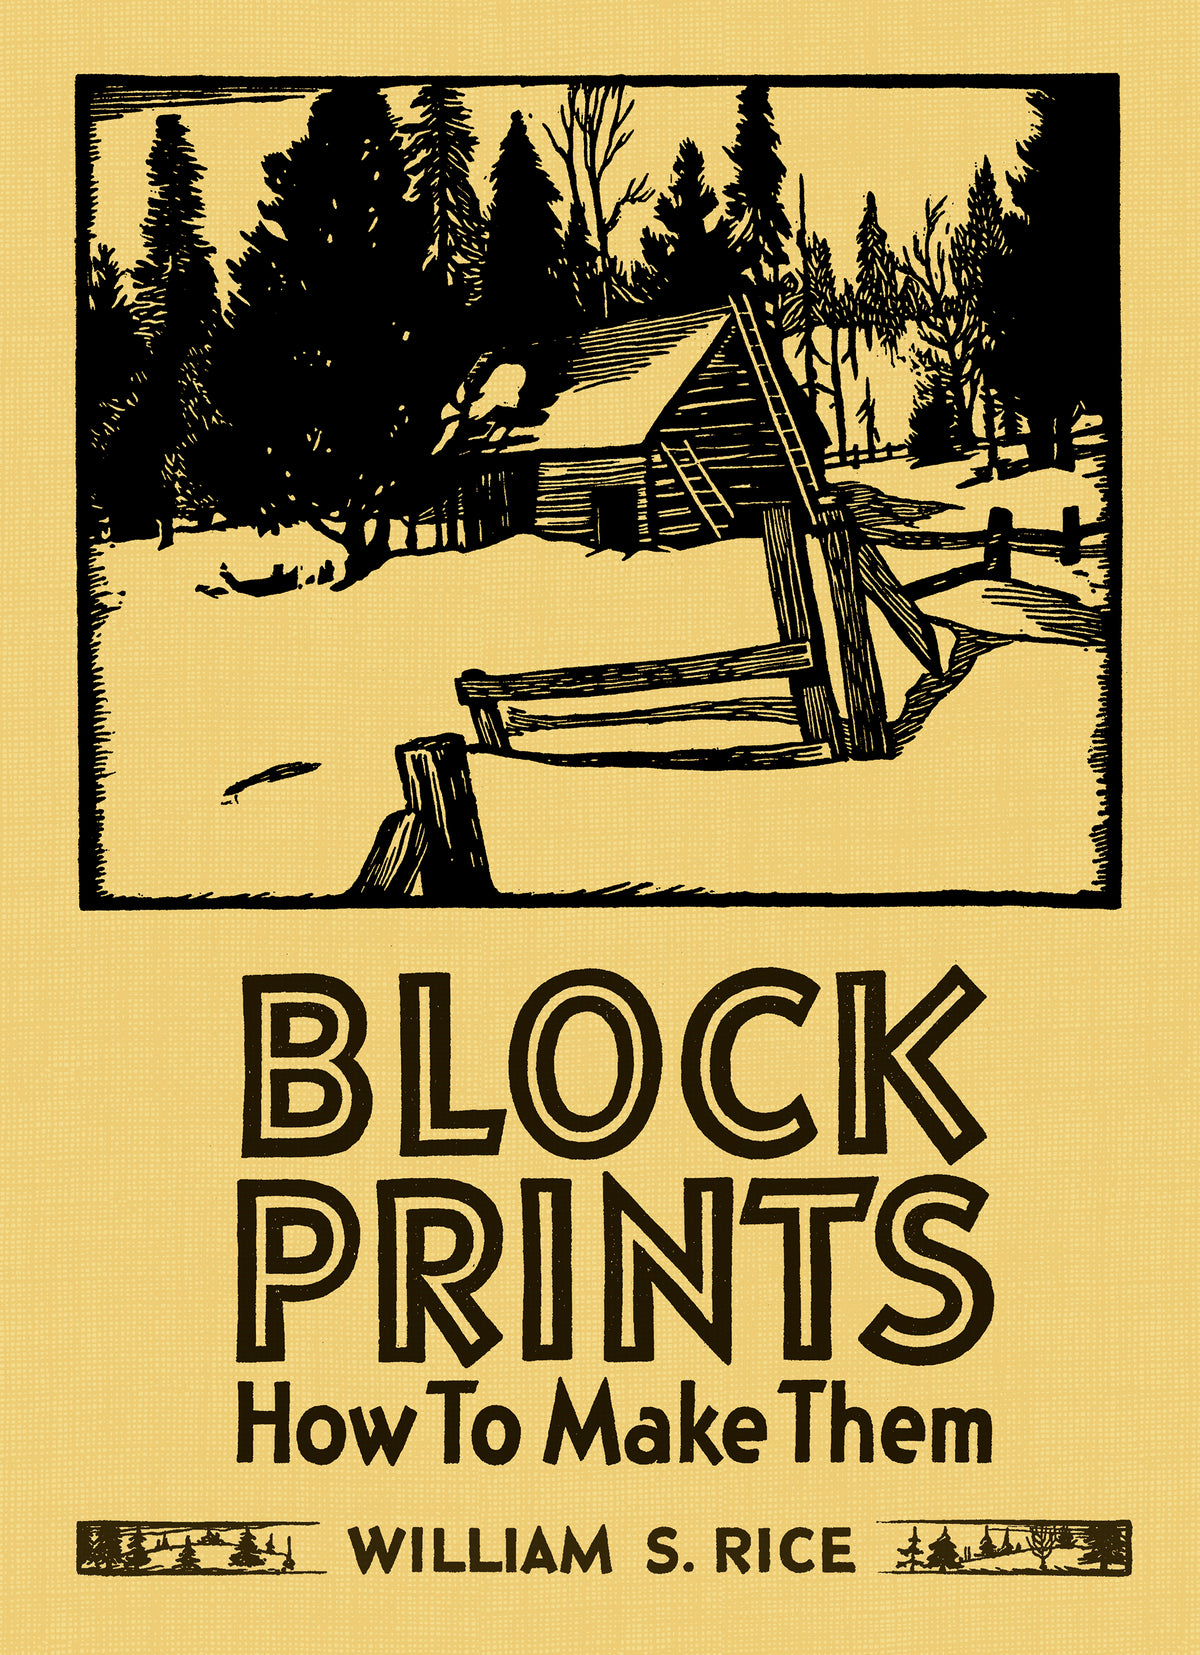 Block printing with Linoleum